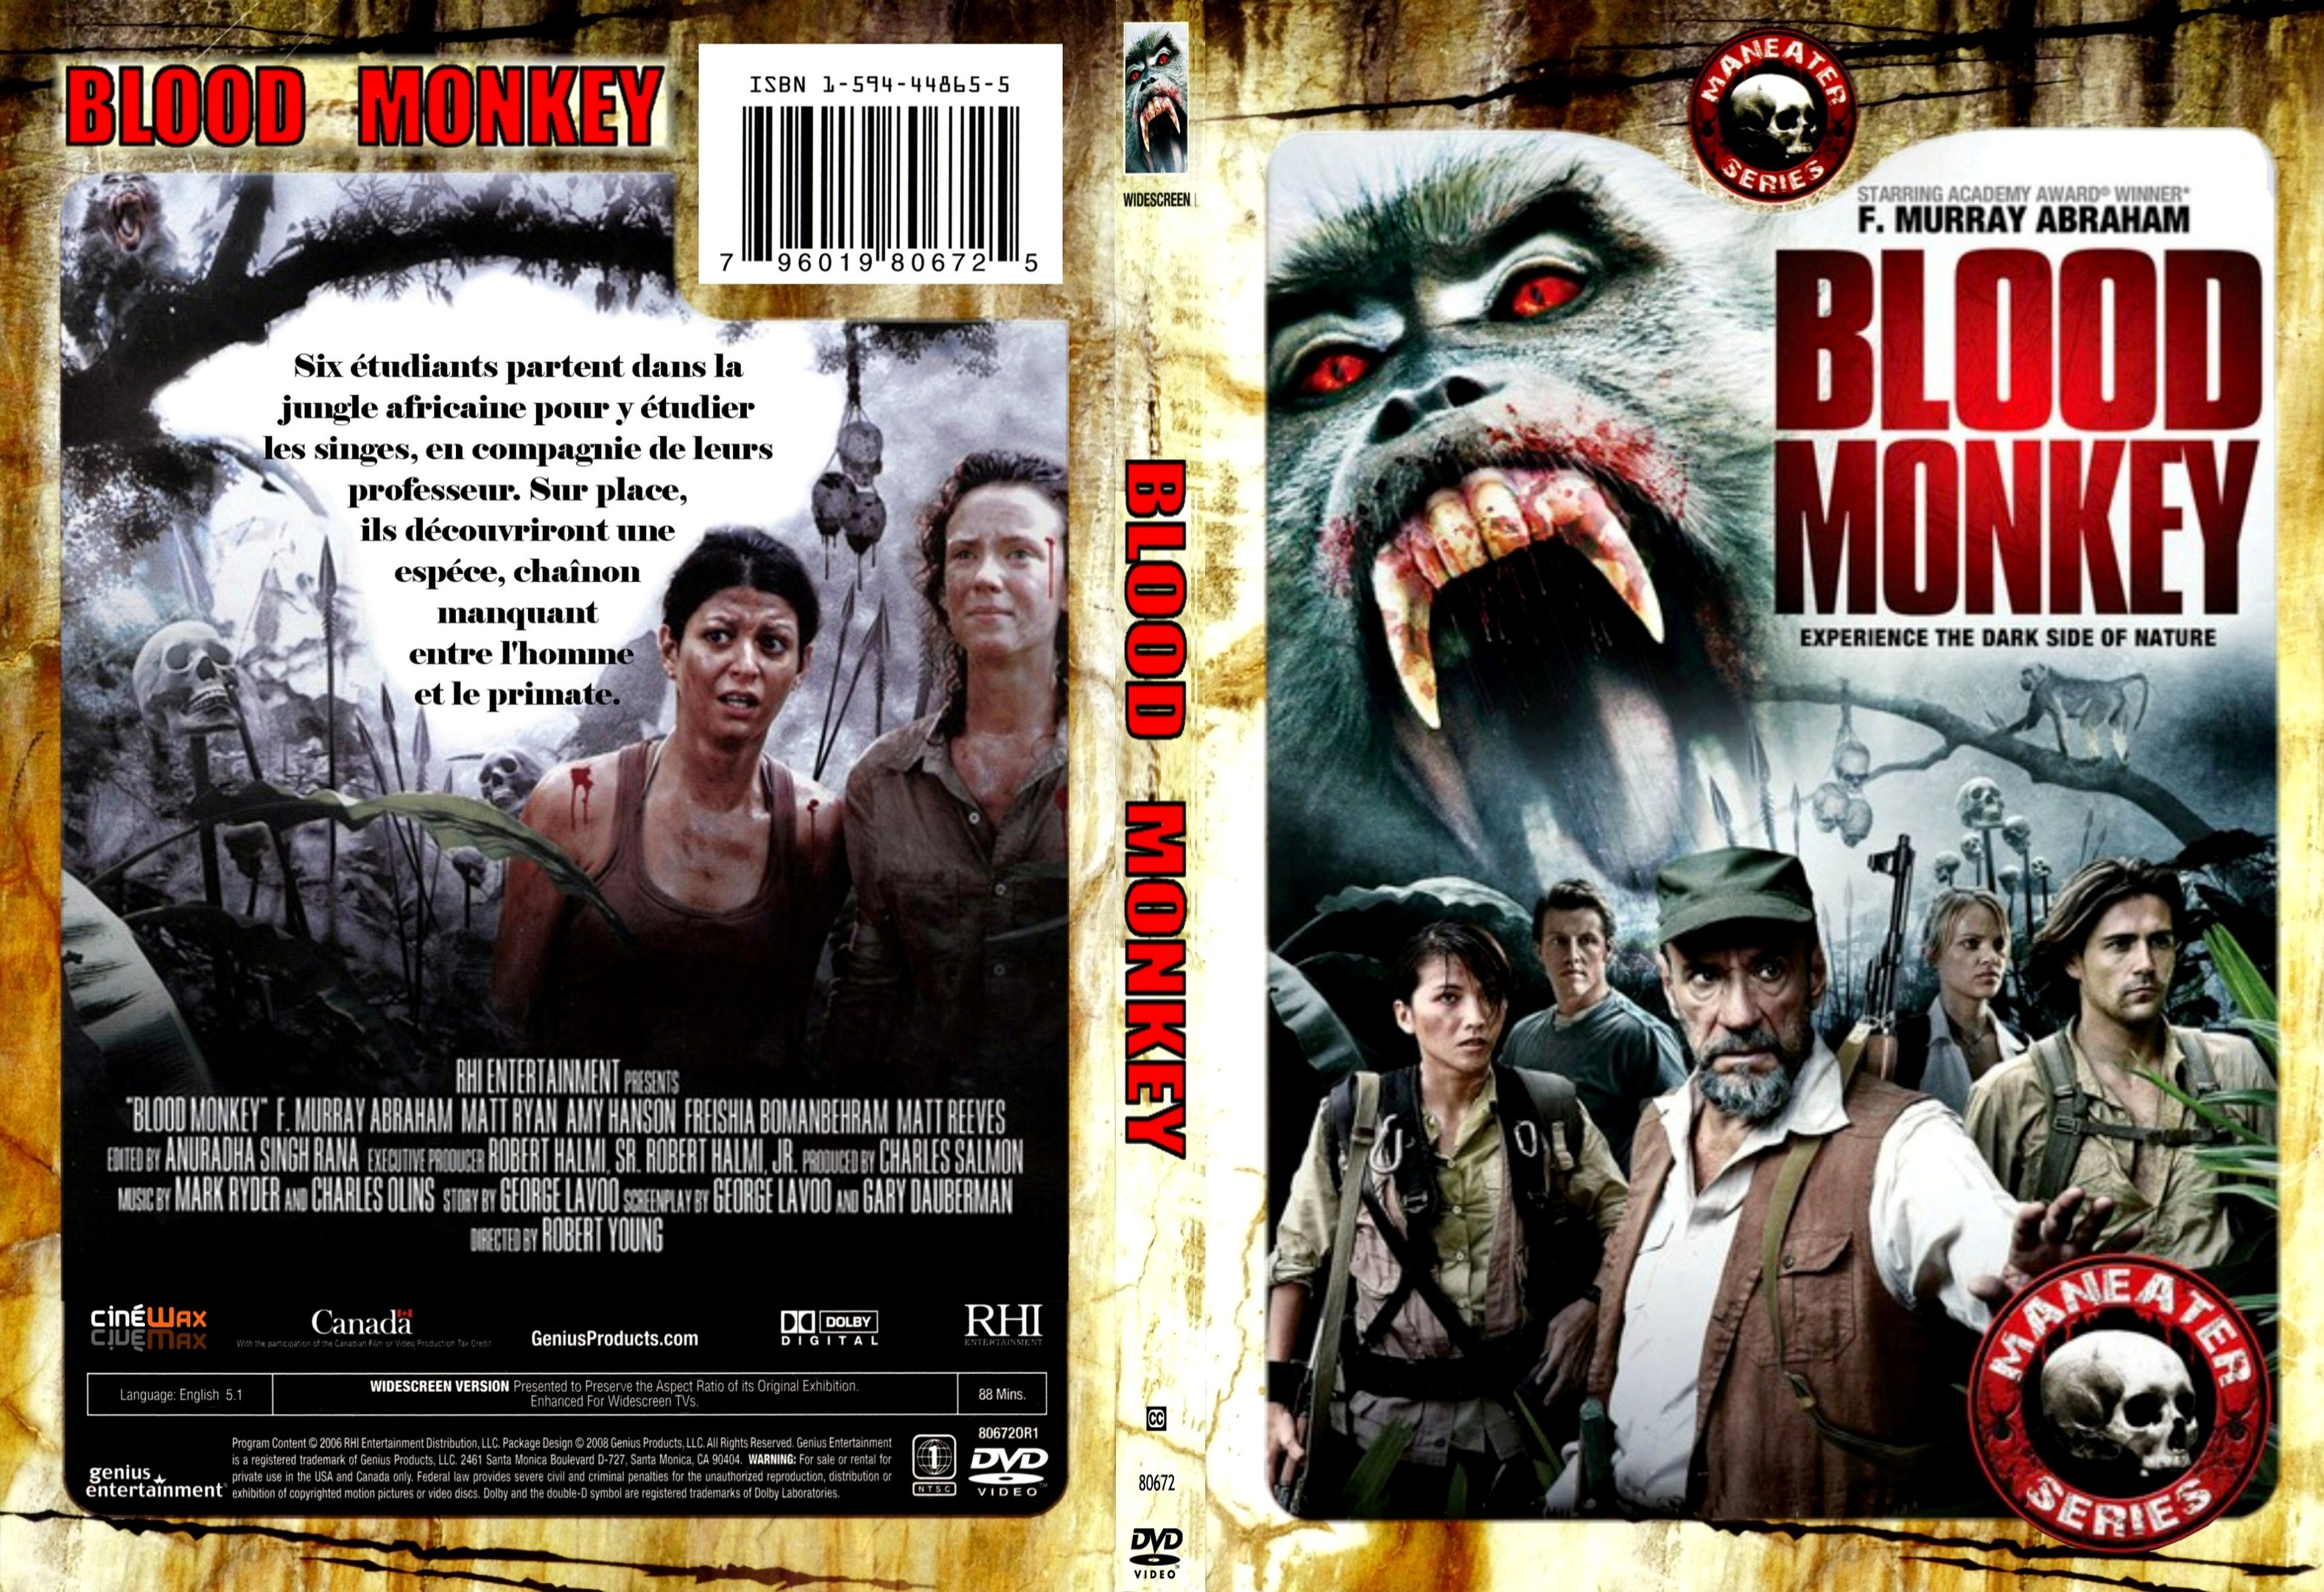 Jaquette DVD Bloody Monkey custom - SLIM v2